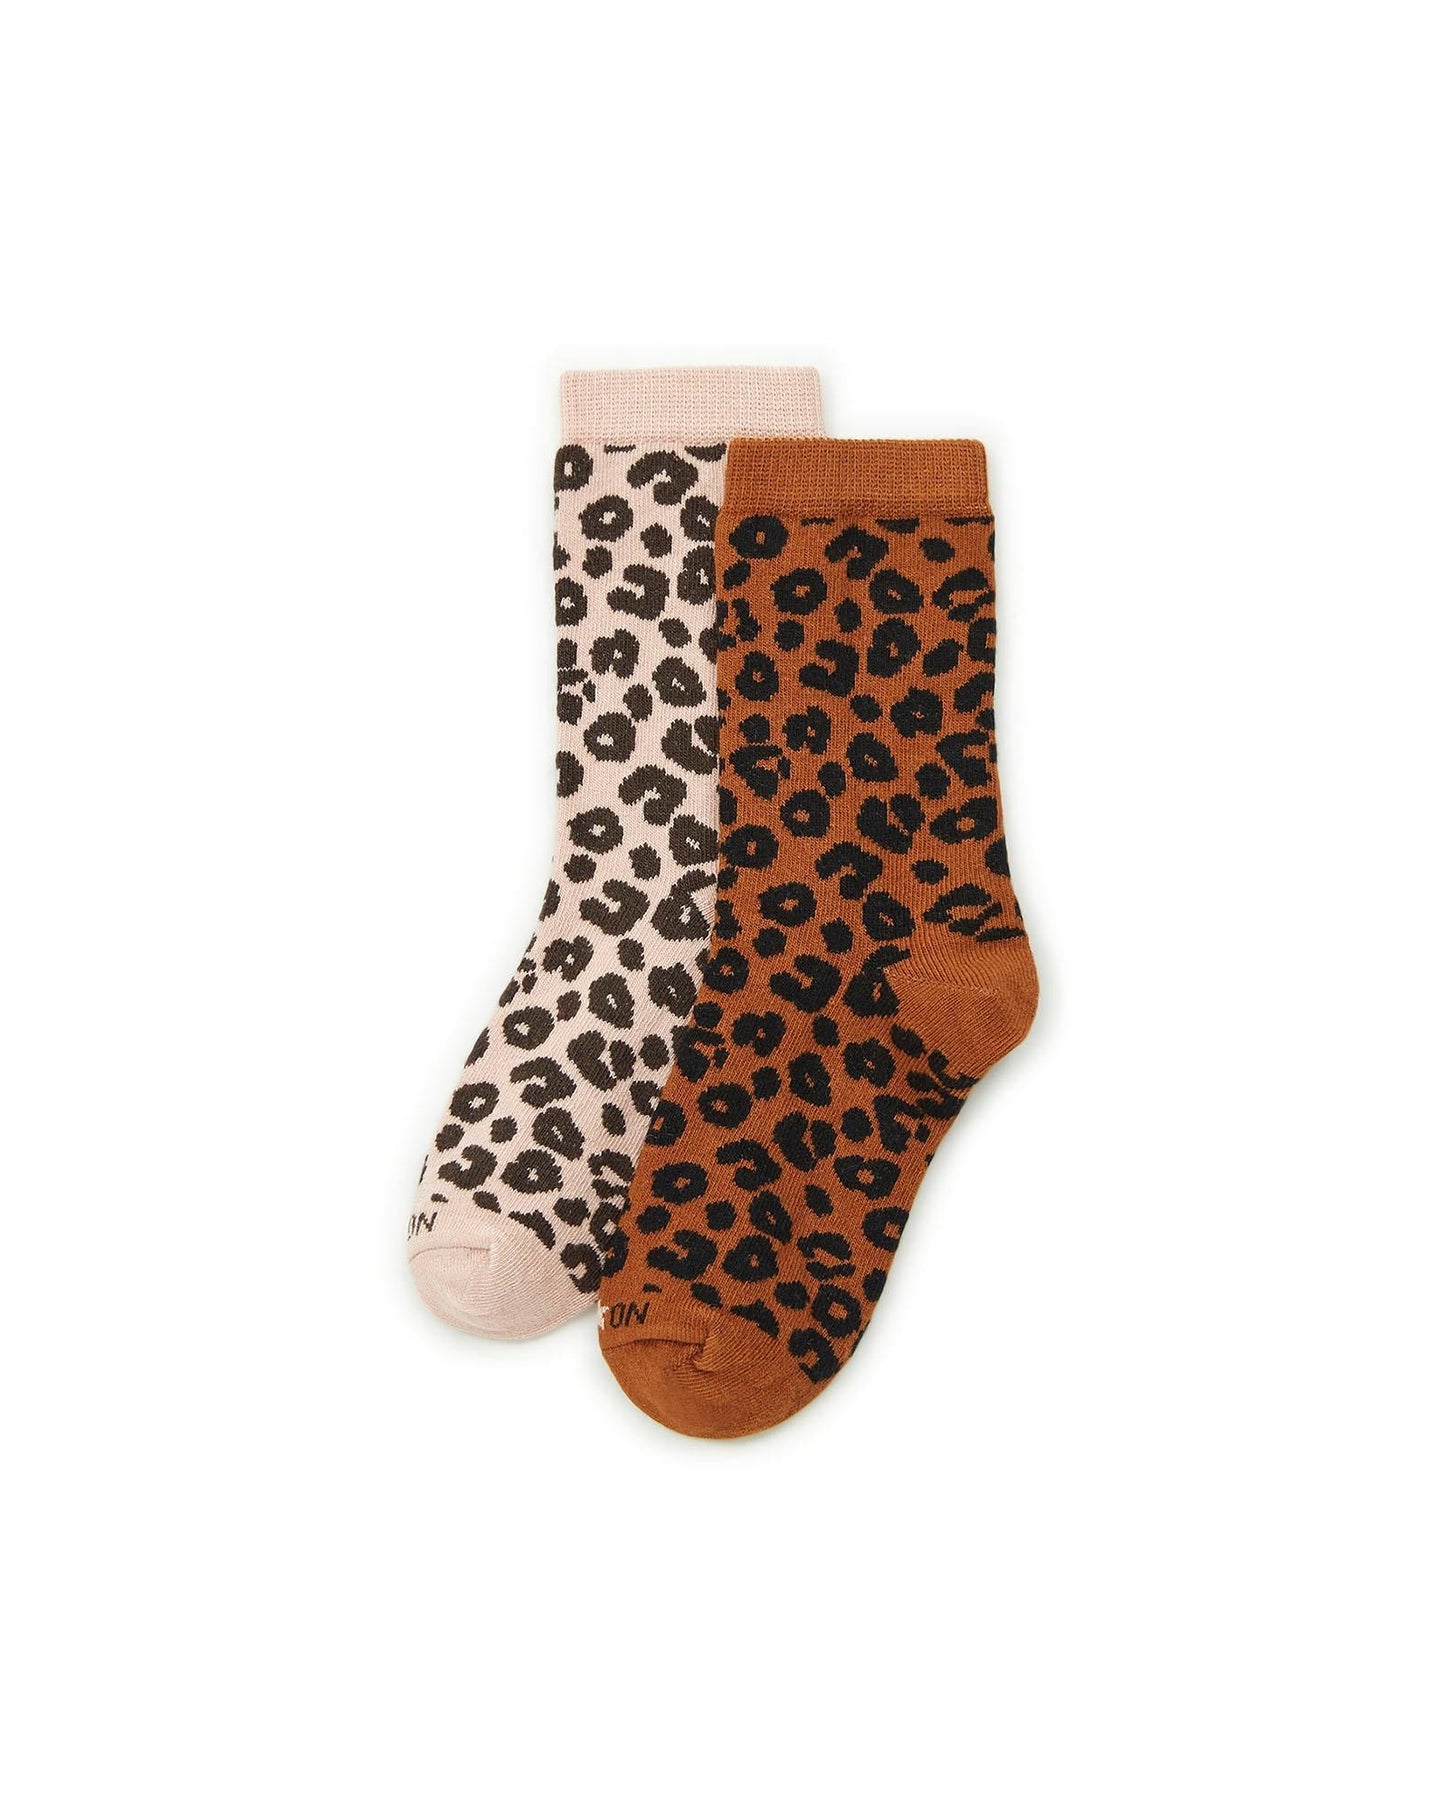 Leo Duo sock Pink leopard